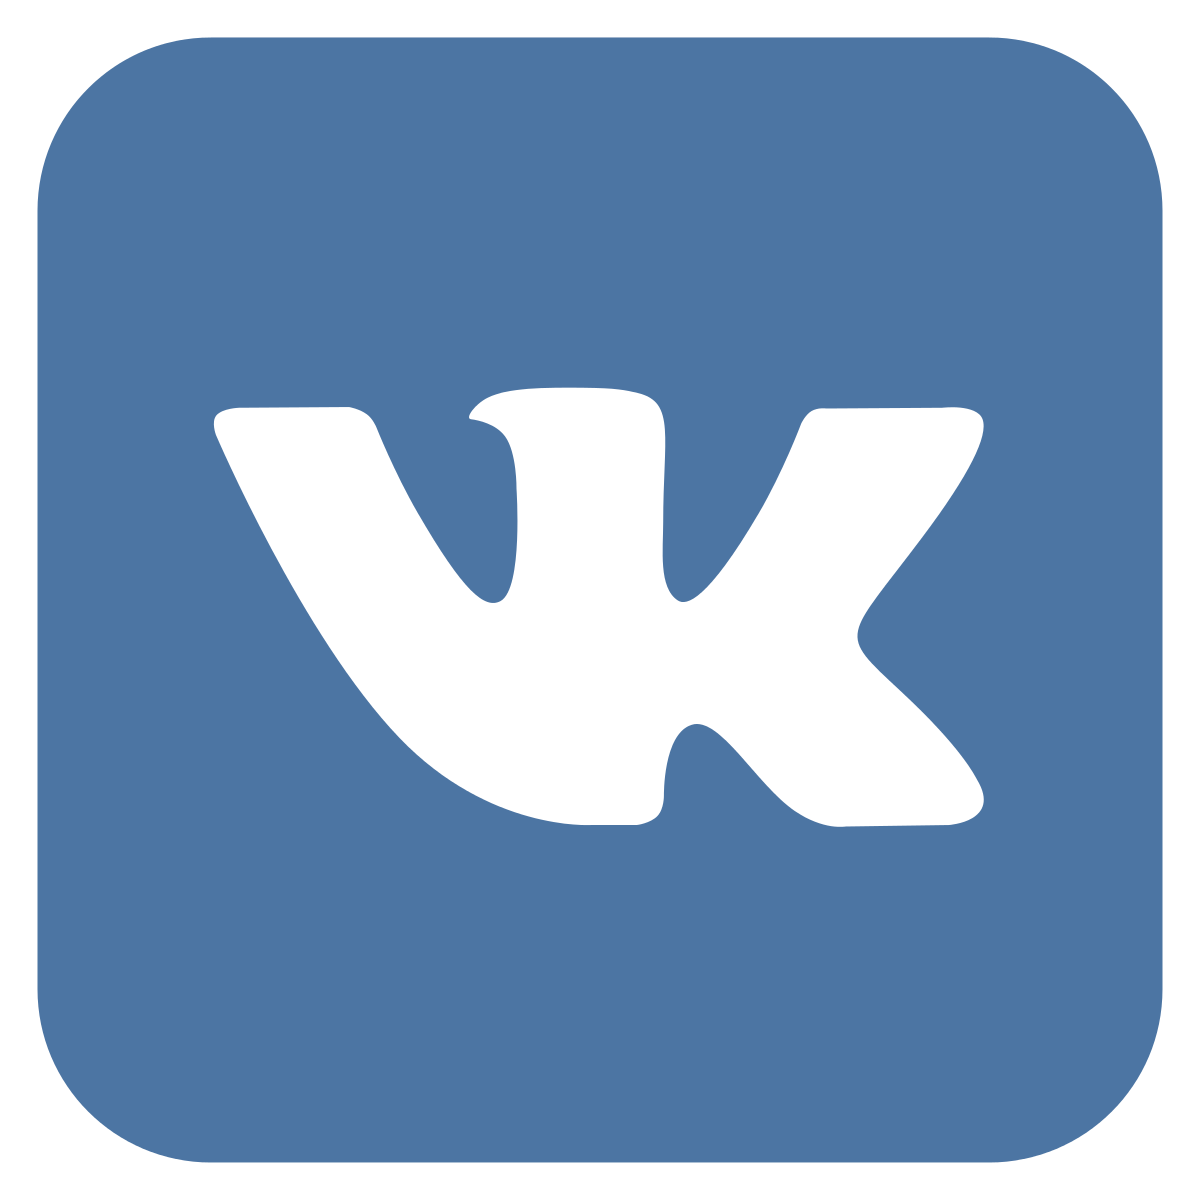 Vk.com страница Эдгард